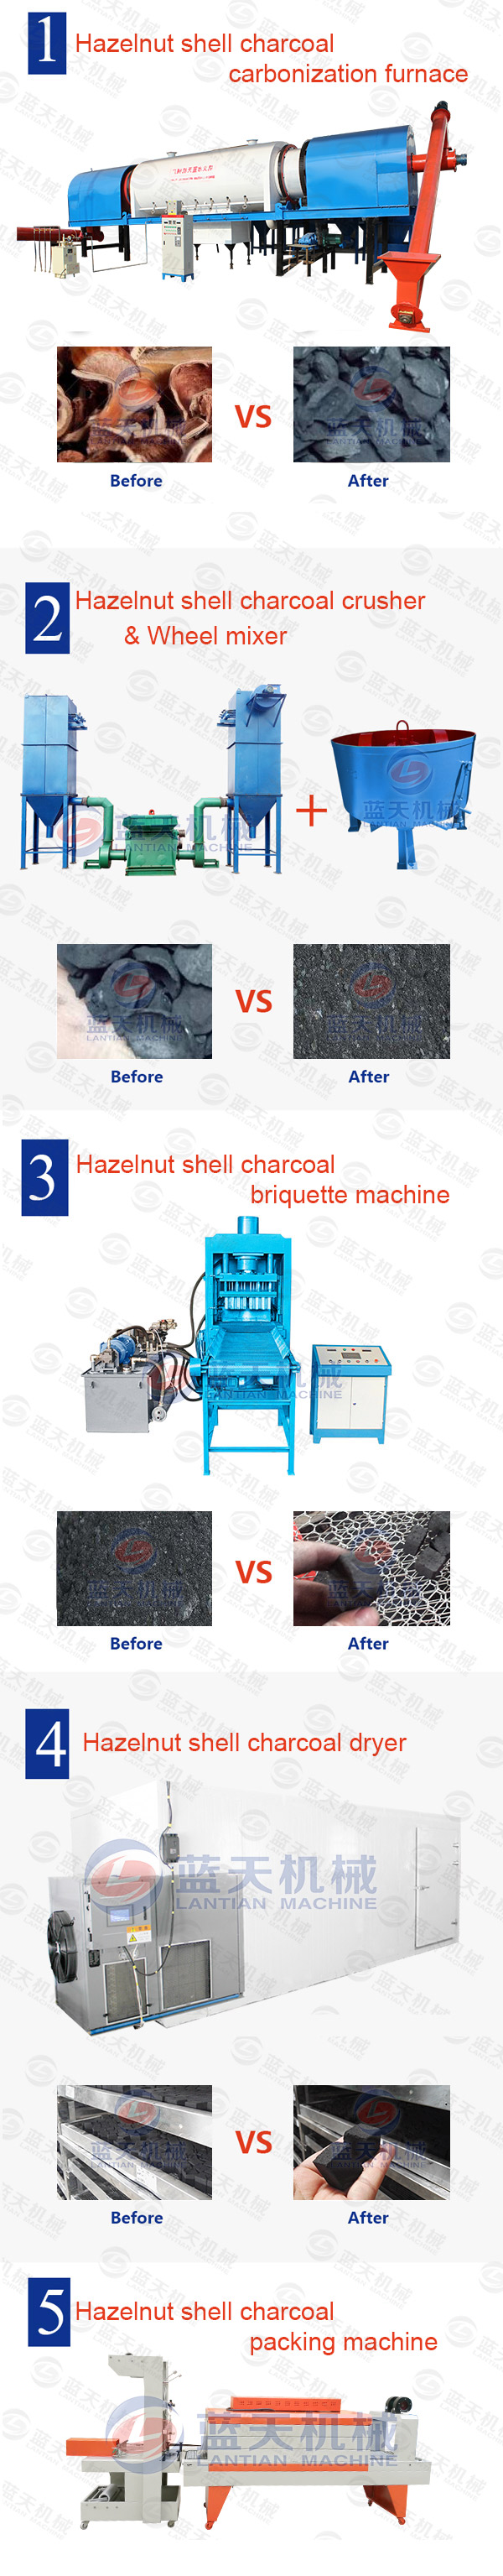 Product line of hazelnut shell charcoal machine